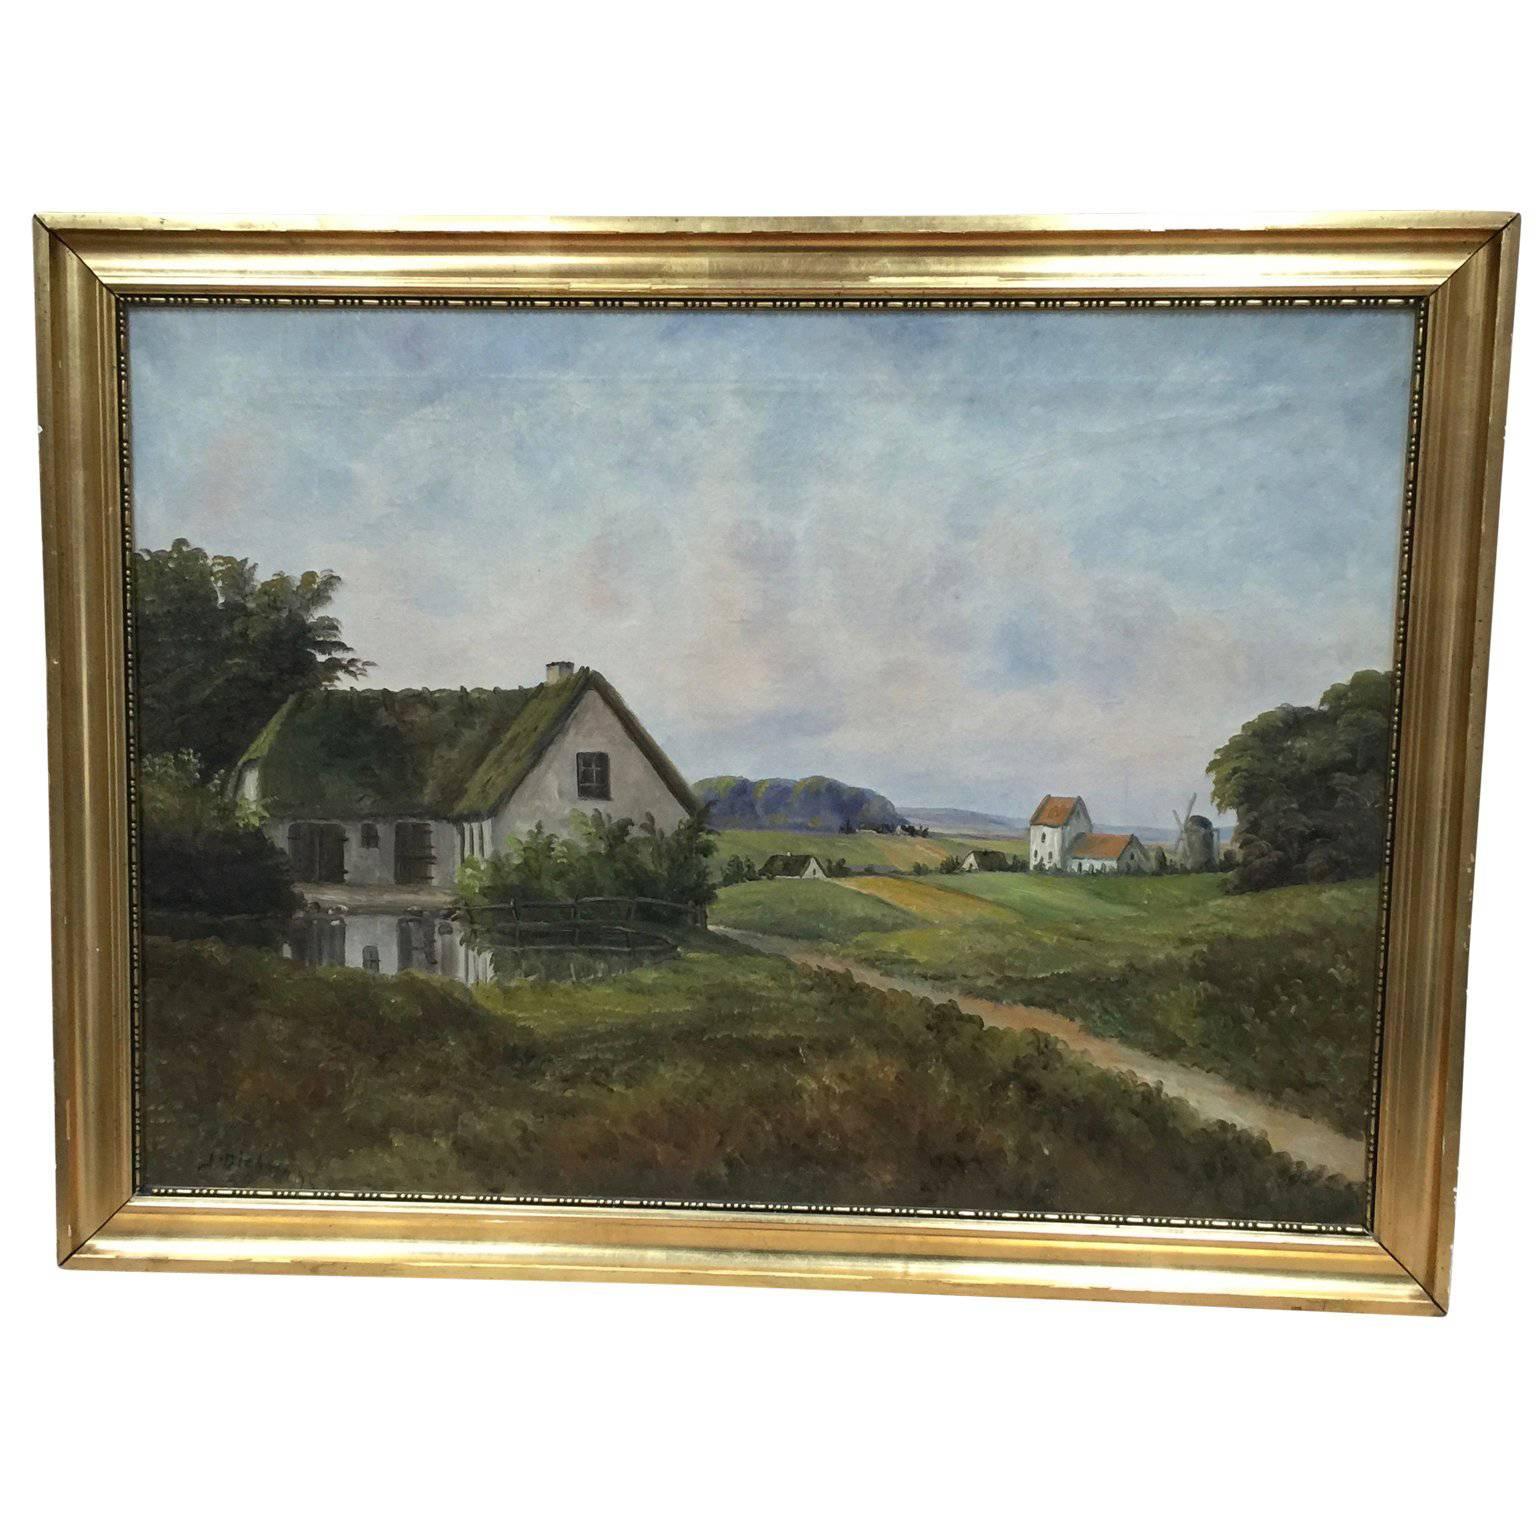 19th Century Painting of a Danish Farm-House